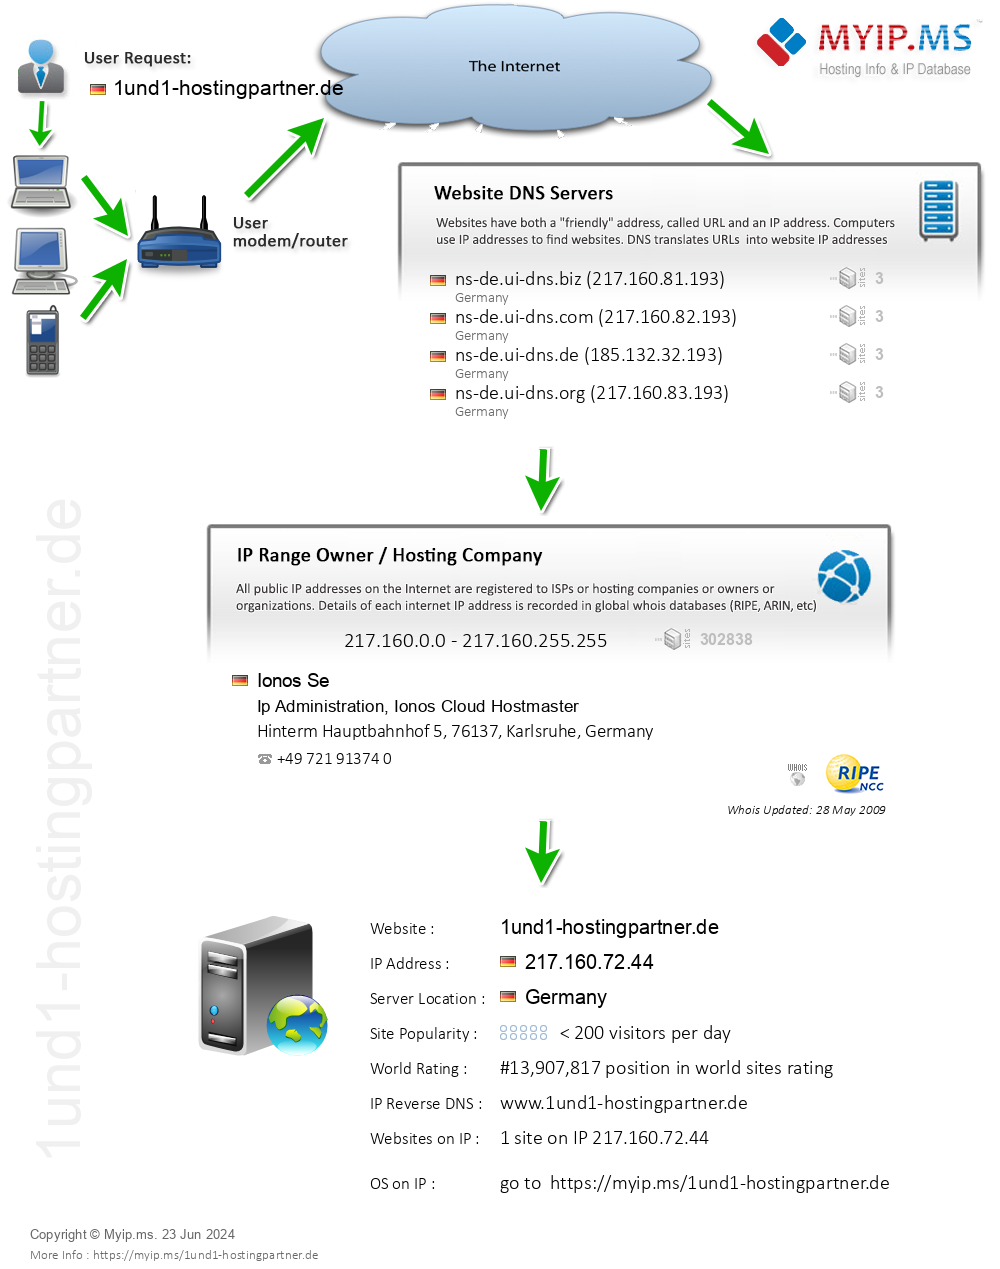 1und1-hostingpartner.de - Website Hosting Visual IP Diagram